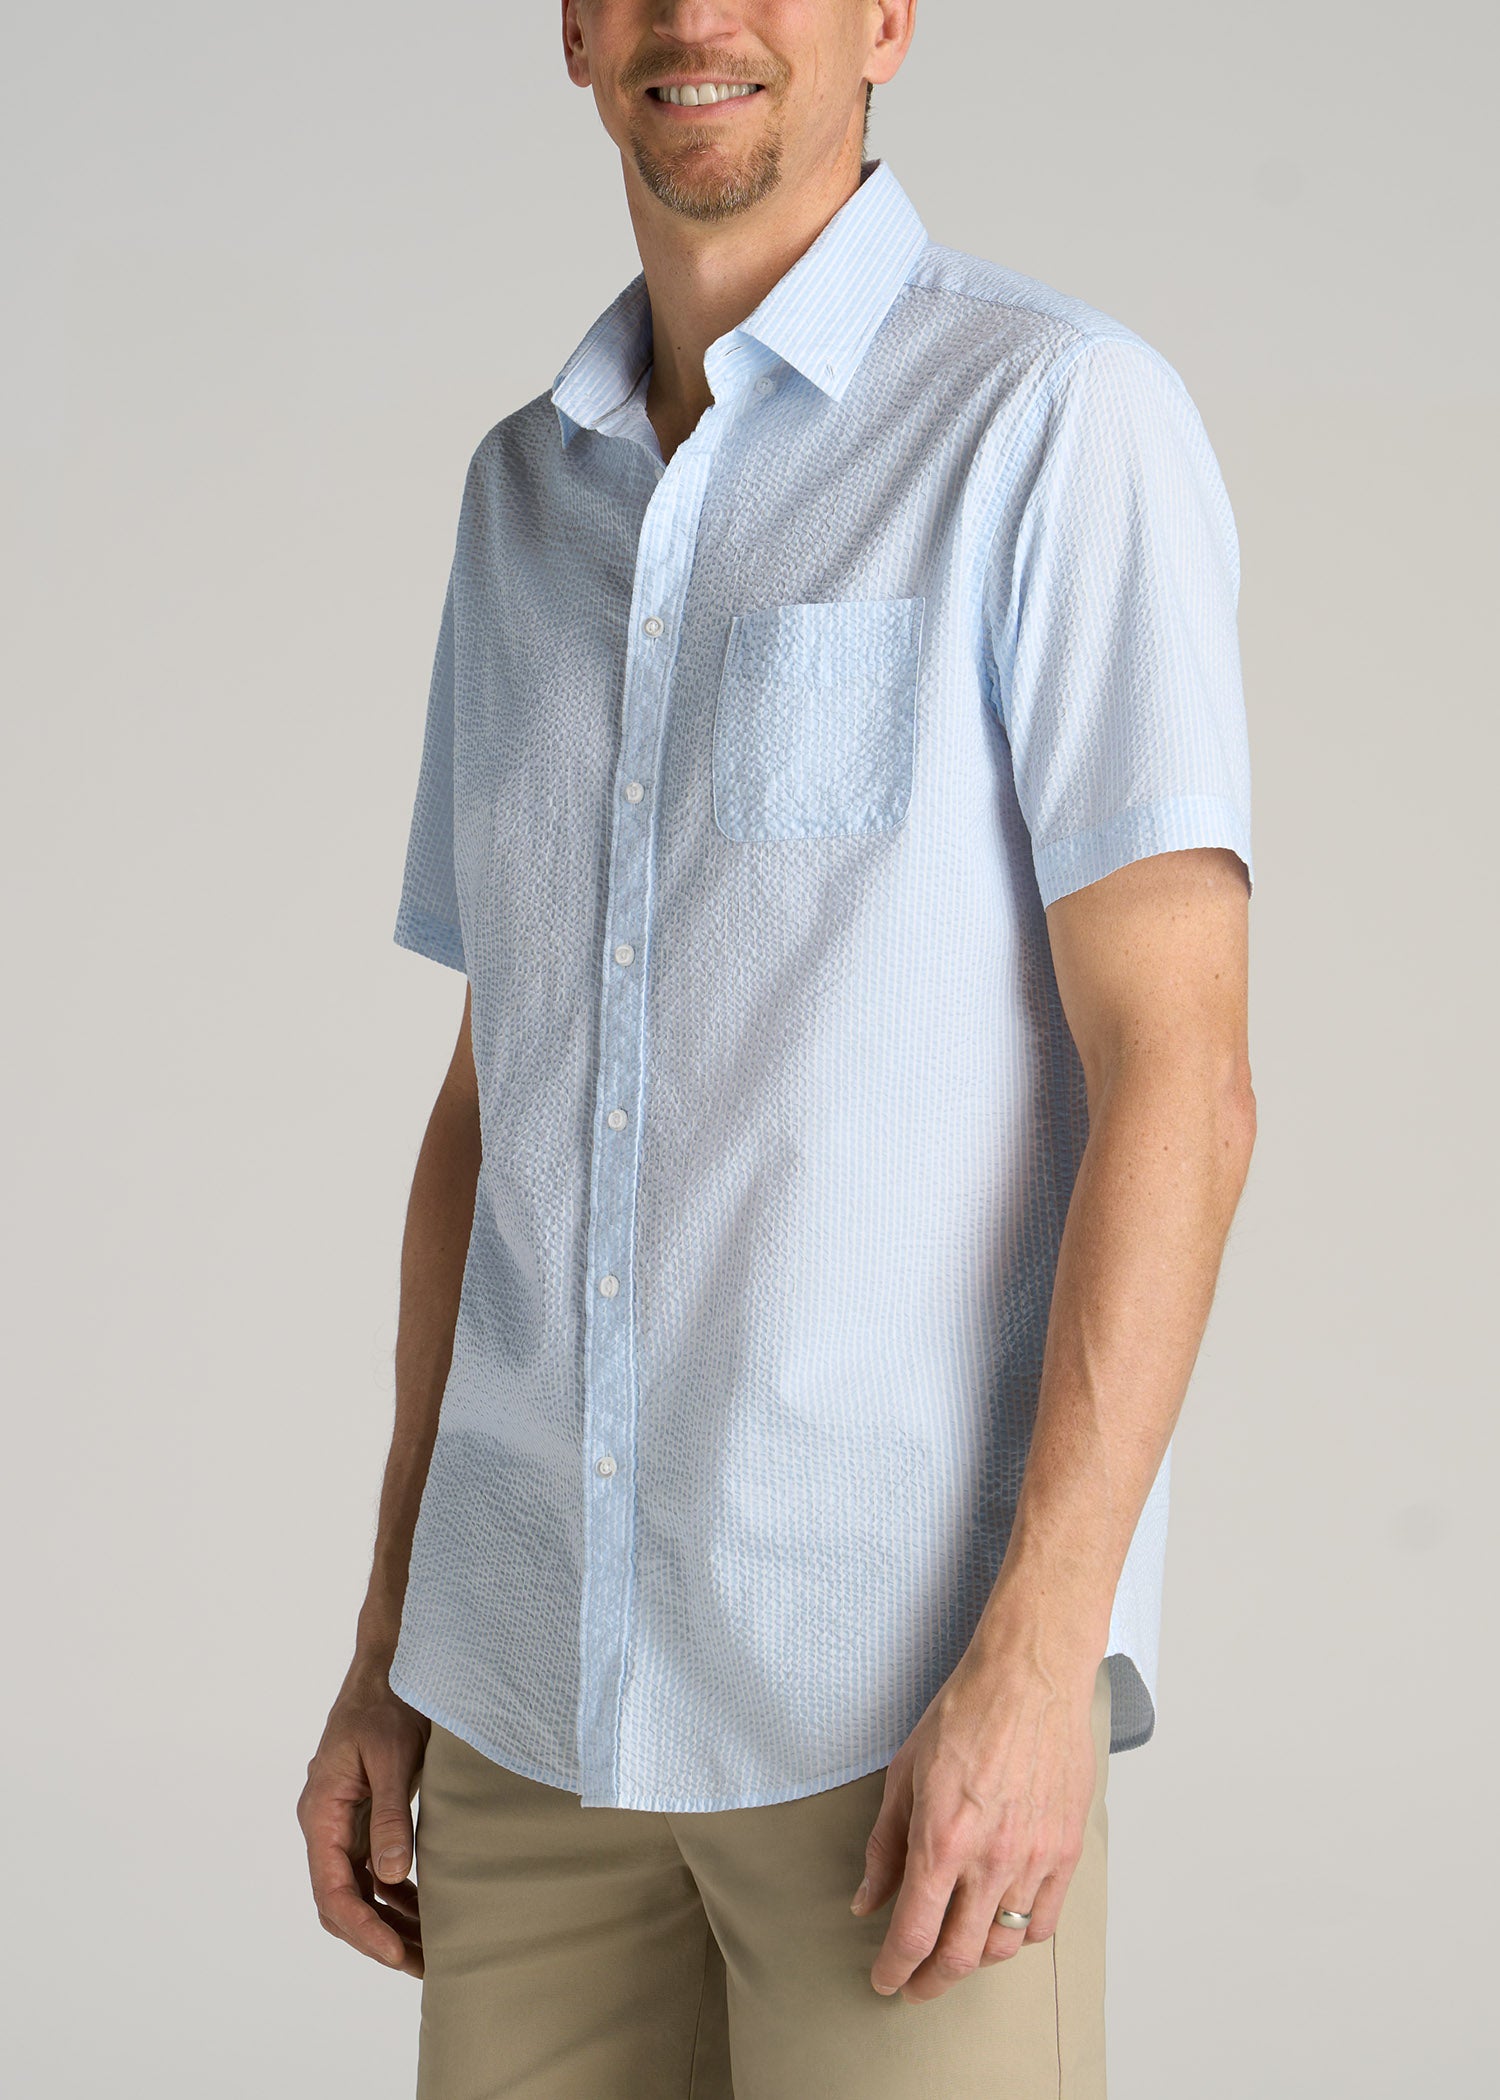 Men's Short Sleeve Shirts Freret Teal Solid Seersucker, 54% OFF